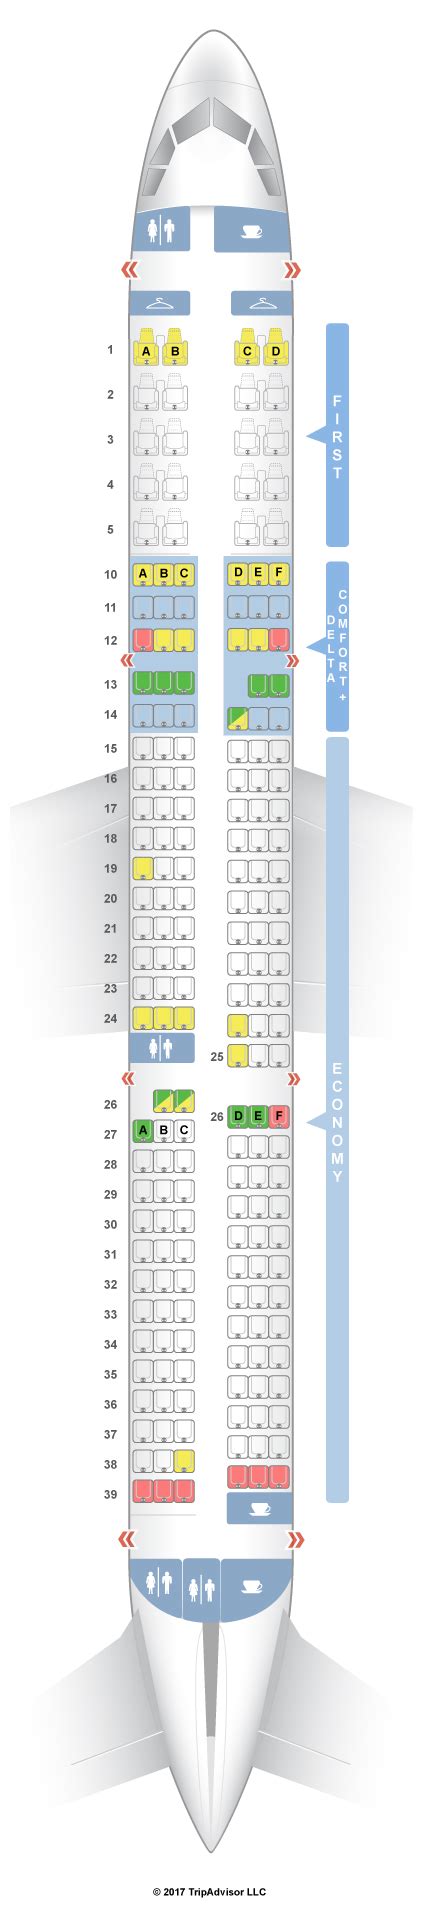 Seatguru Delta A American Airlines A Seating Chart Writflx Hot Sex Picture